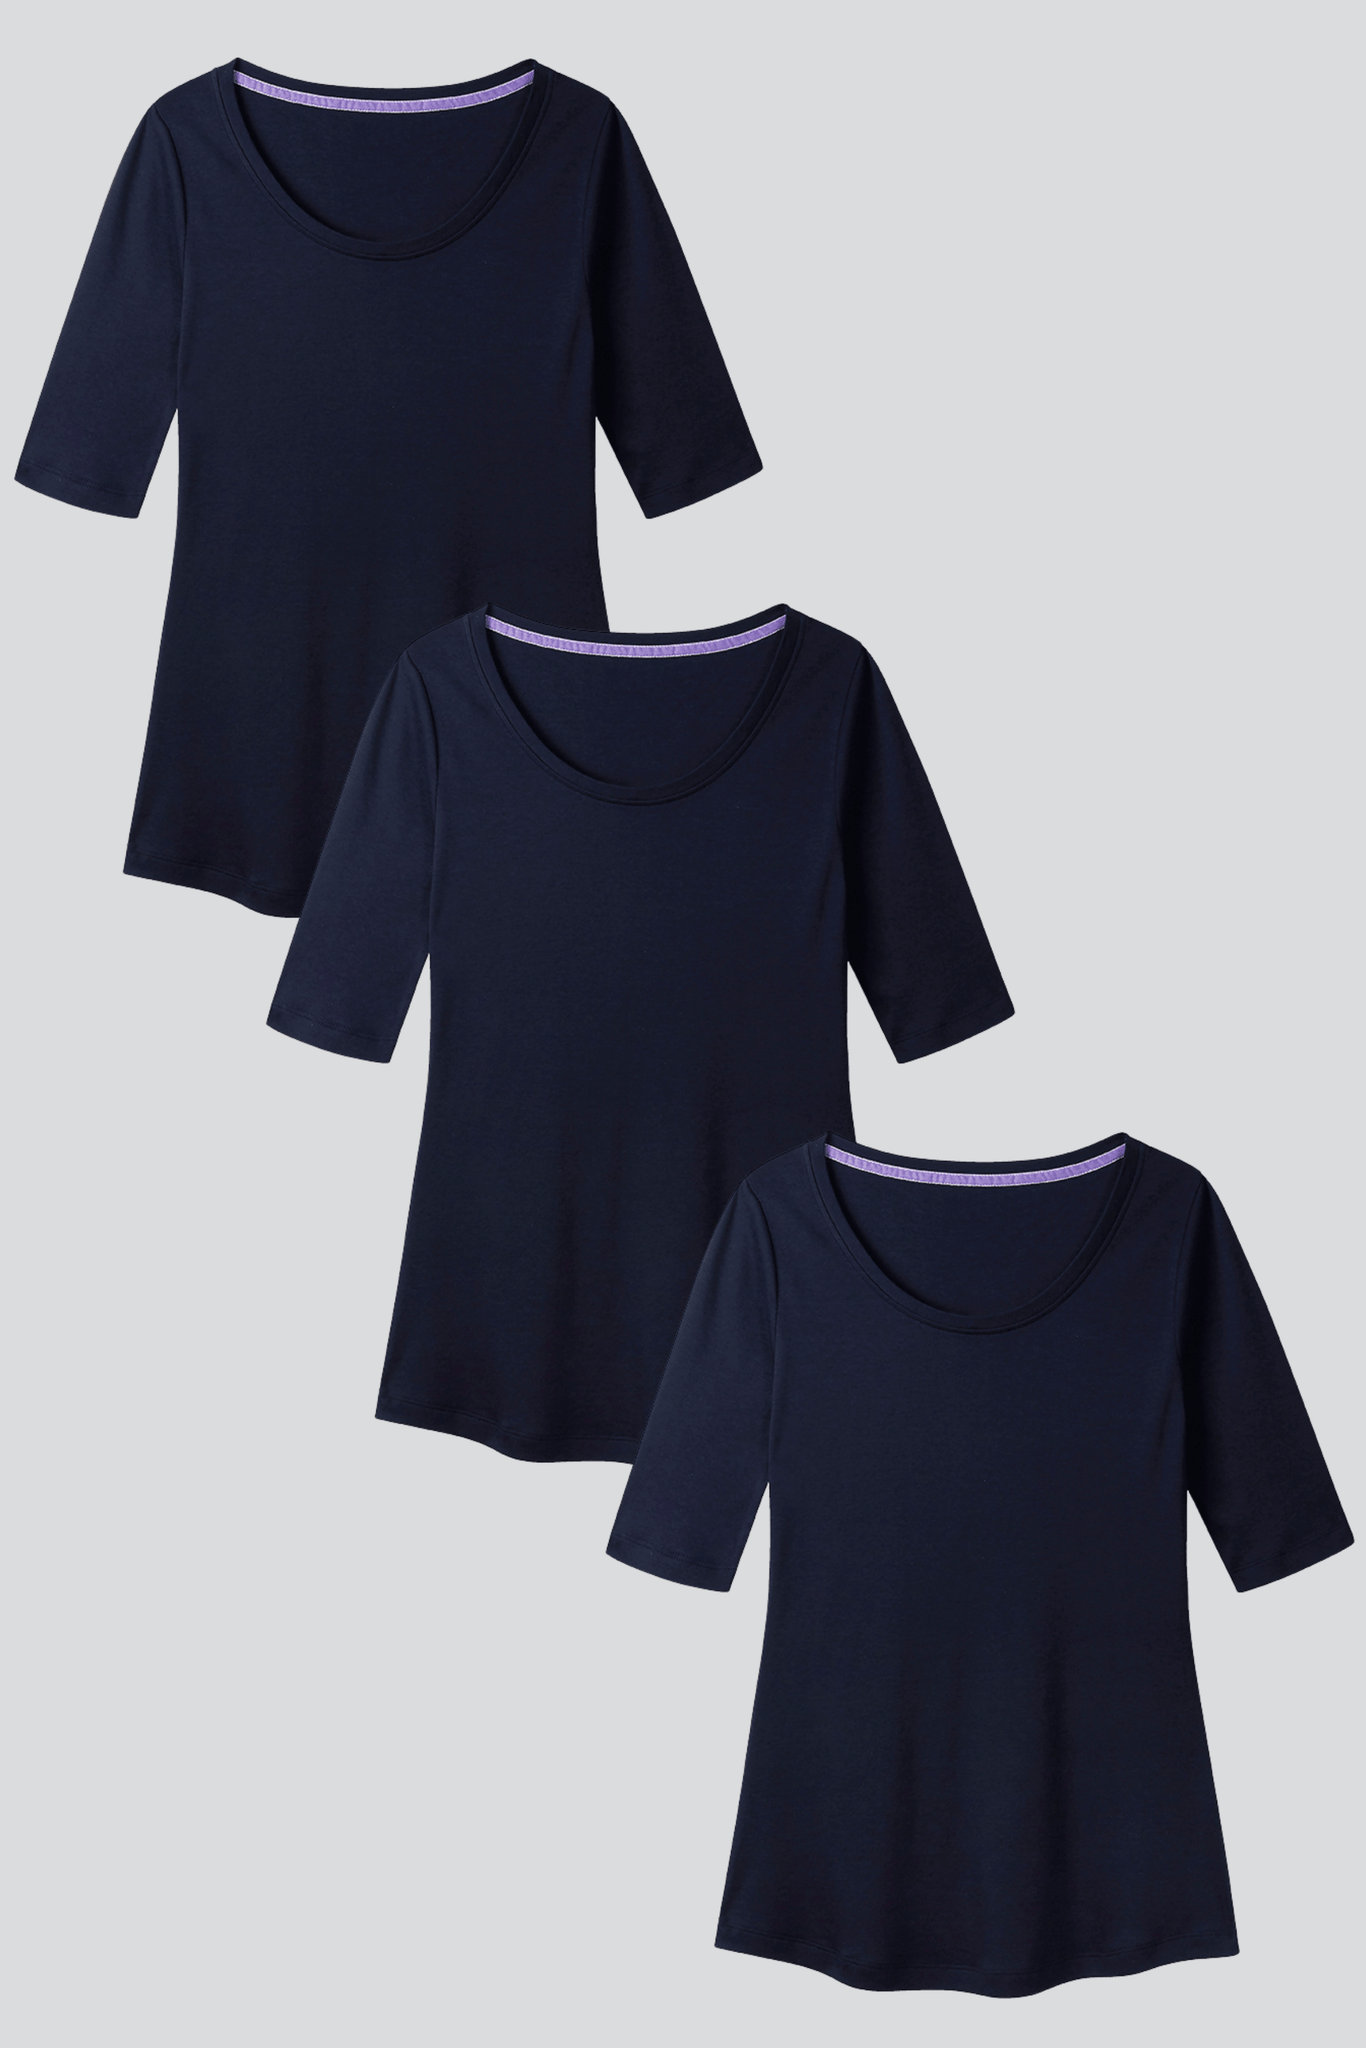 Ladies luxury lavender scoop neck t-shirt | Lavender Hill Clothing